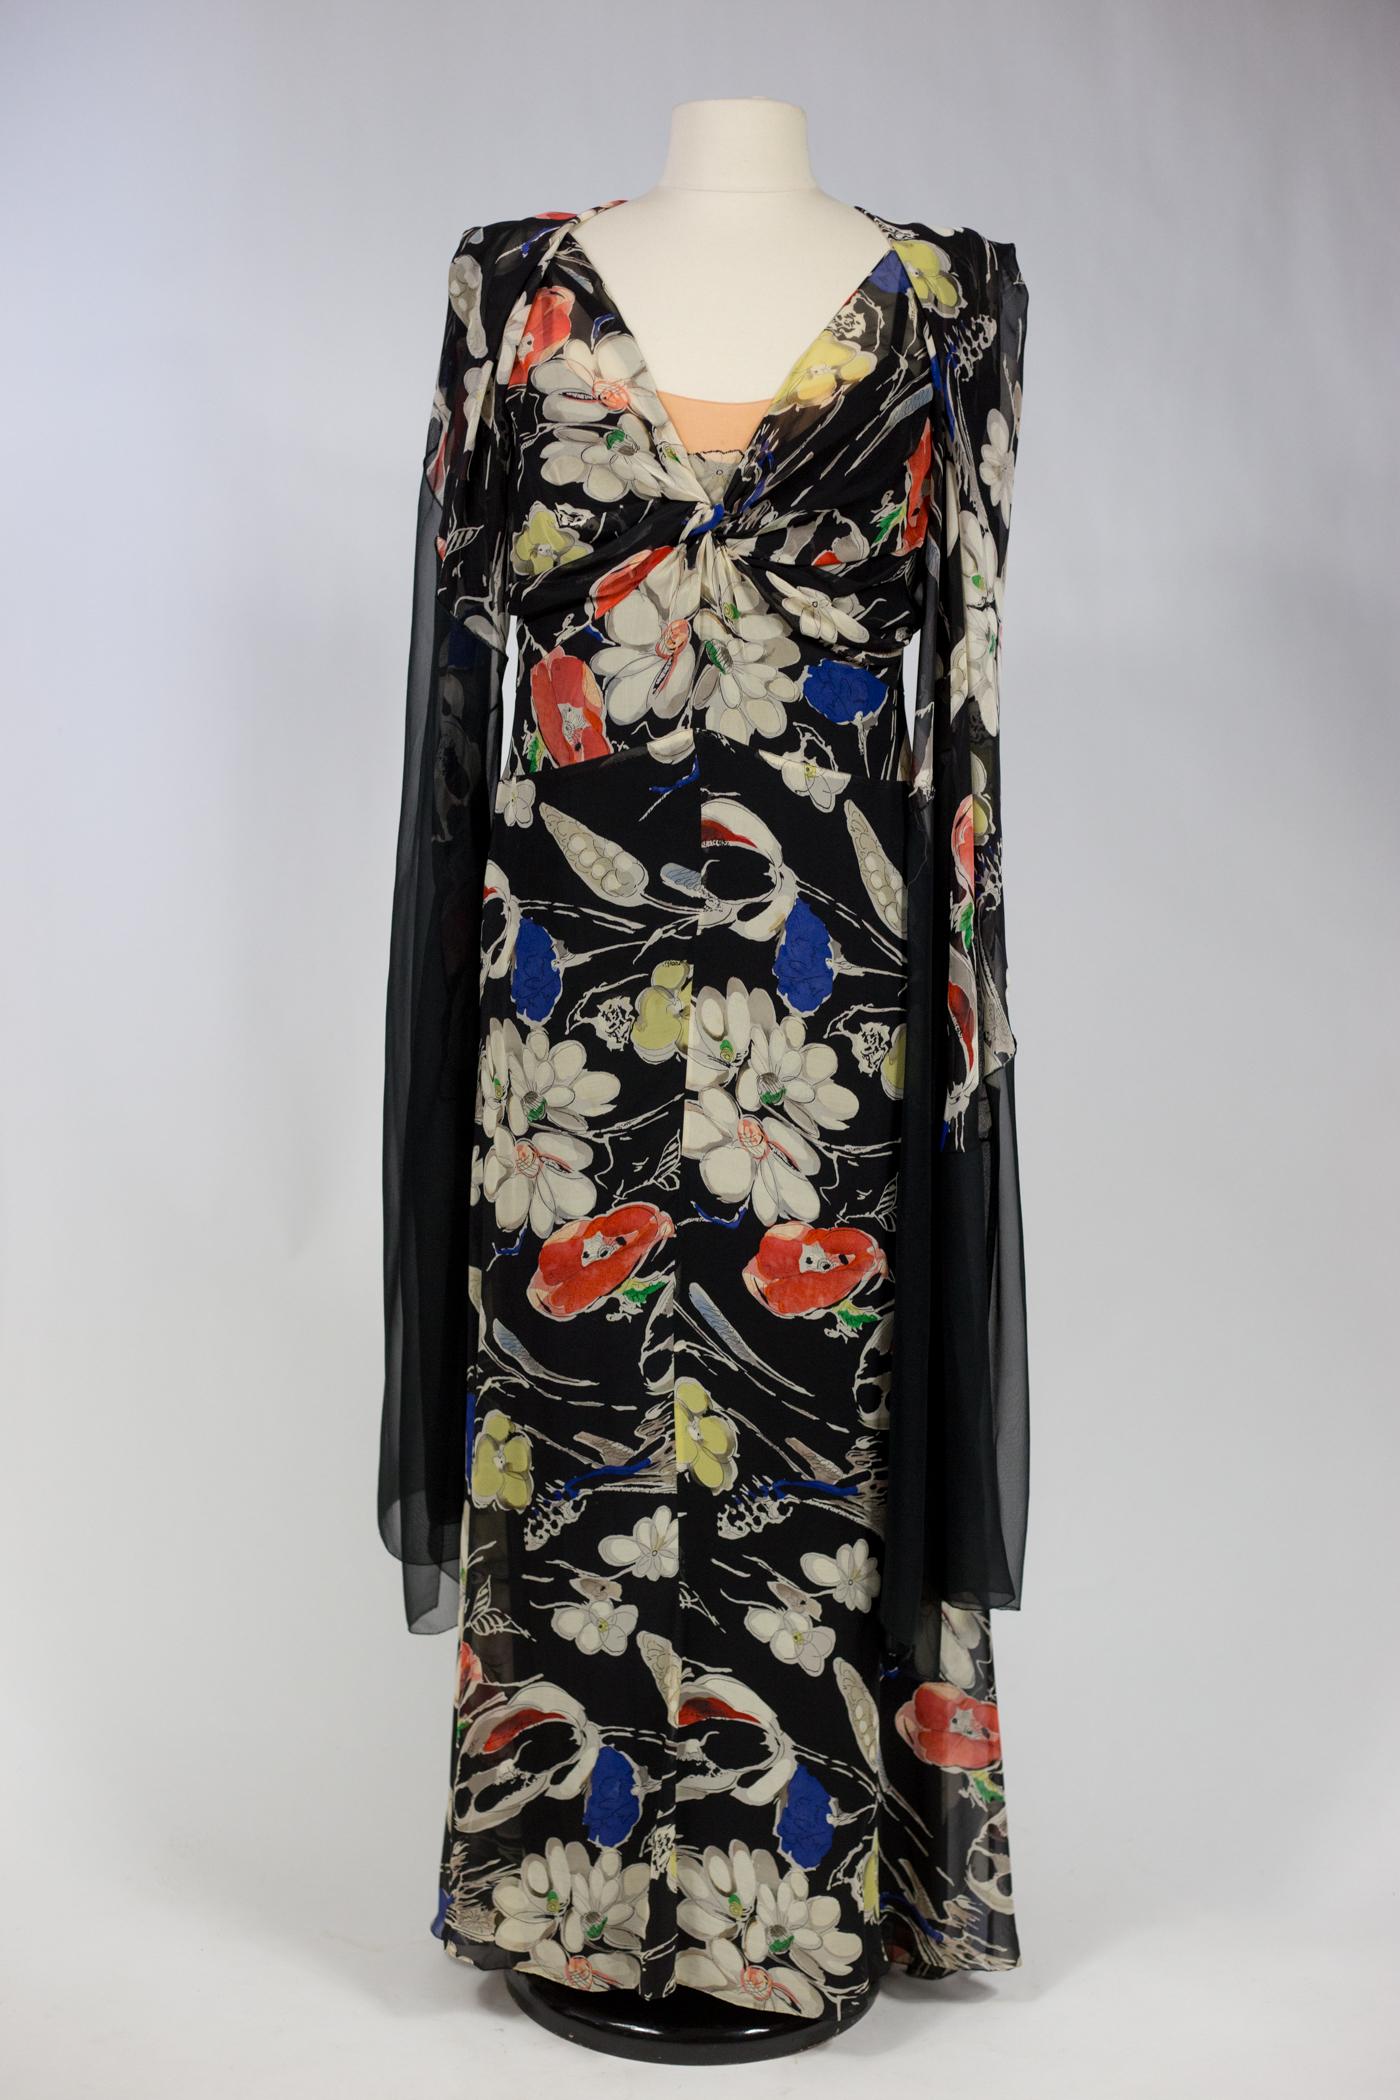 A French Printed Silk Chiffon Dress in the taste of Molyneux Circa 1935/1940 2